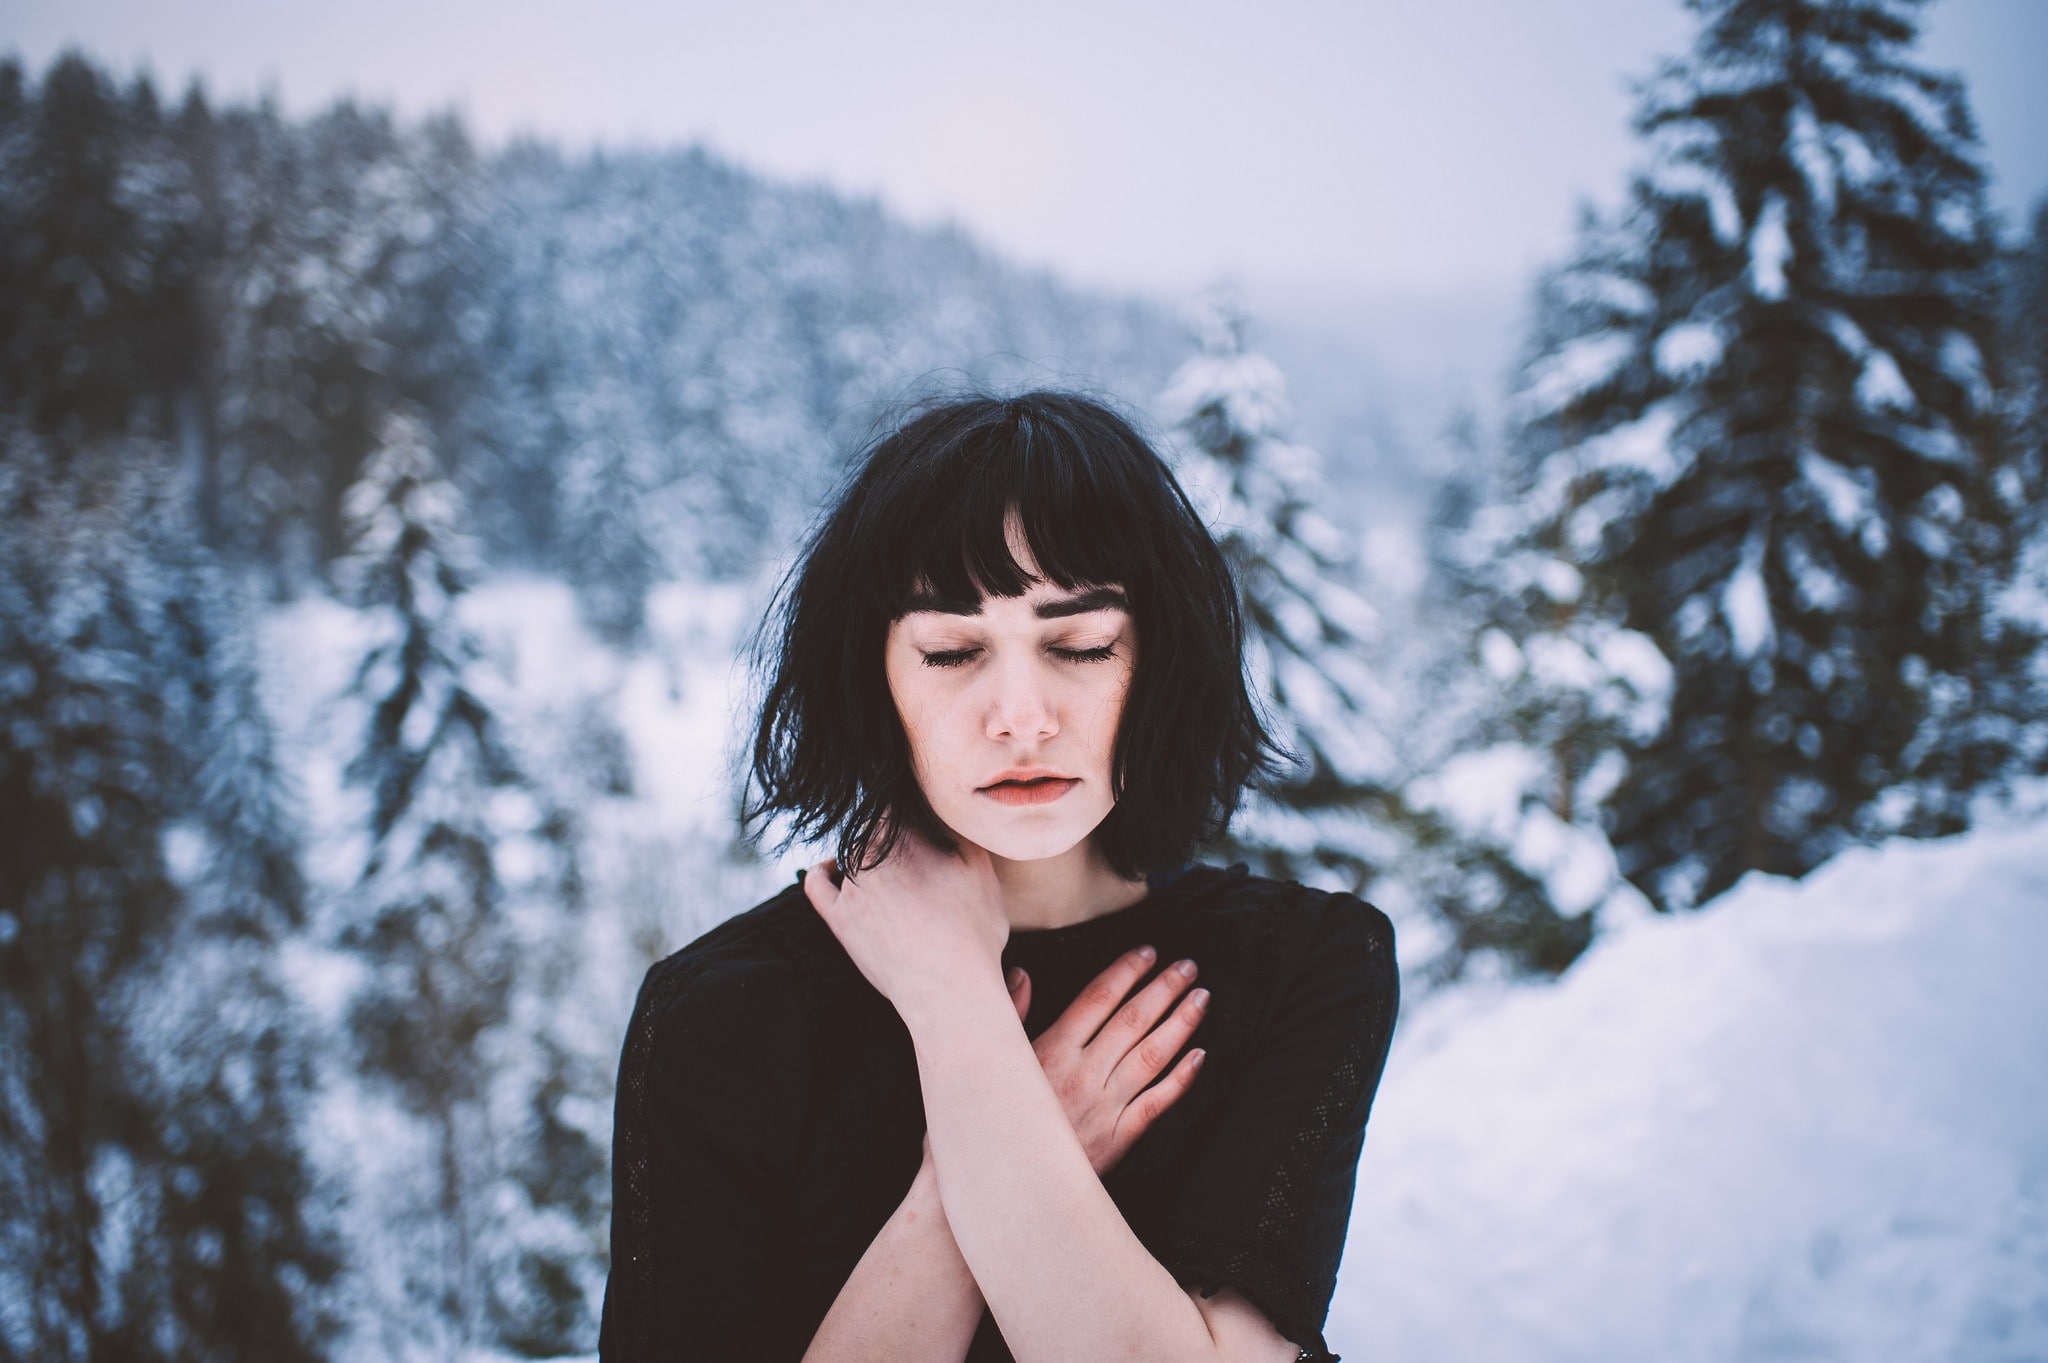 women, black hair, closed eyes, hands on chest, winter, women outdoors